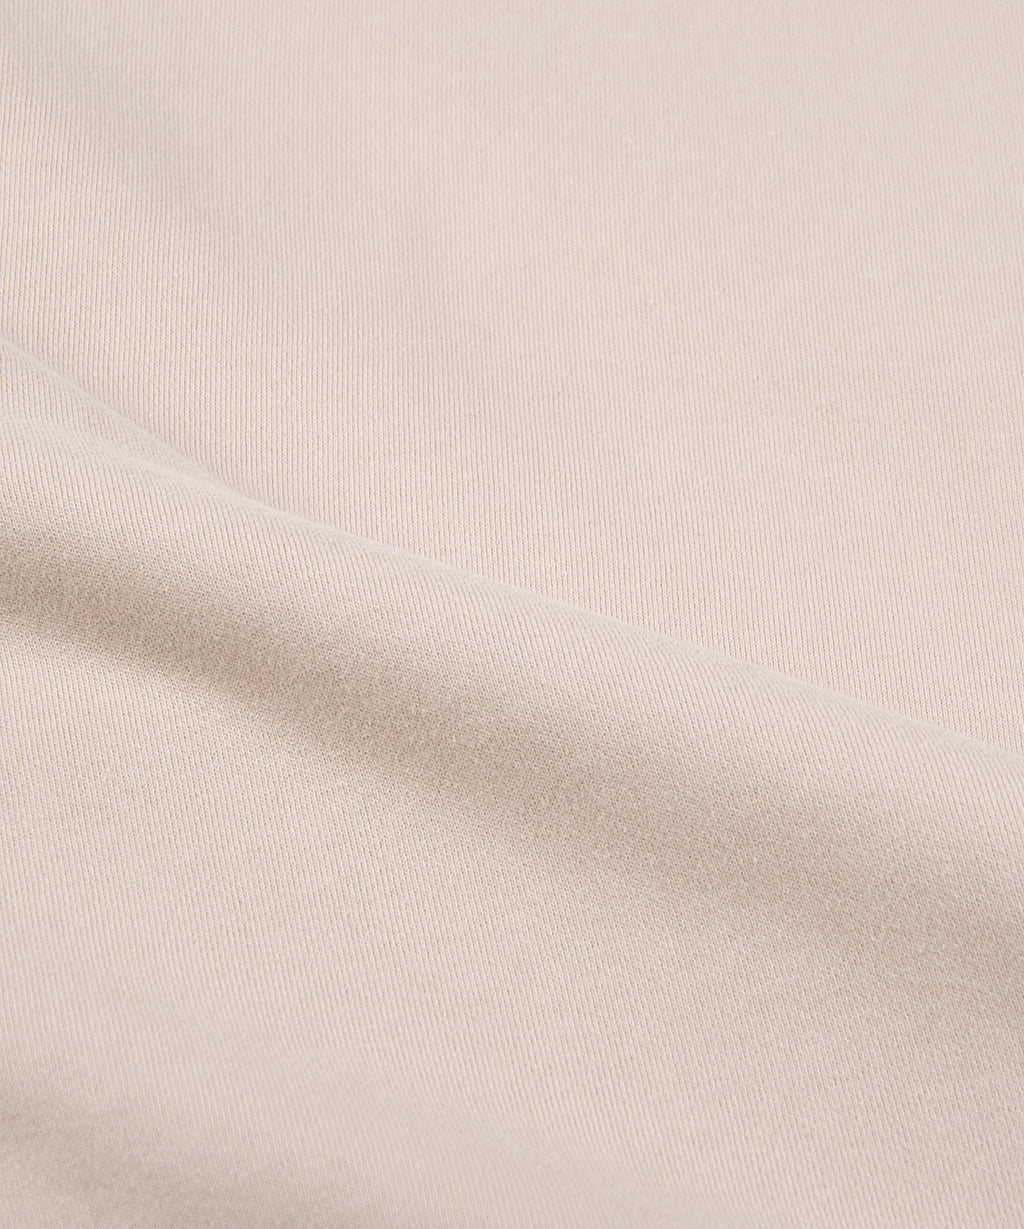  Fabric closeup on Paper Planes The Great Seal Crewneck Sweatshirt, color Moonbeam.